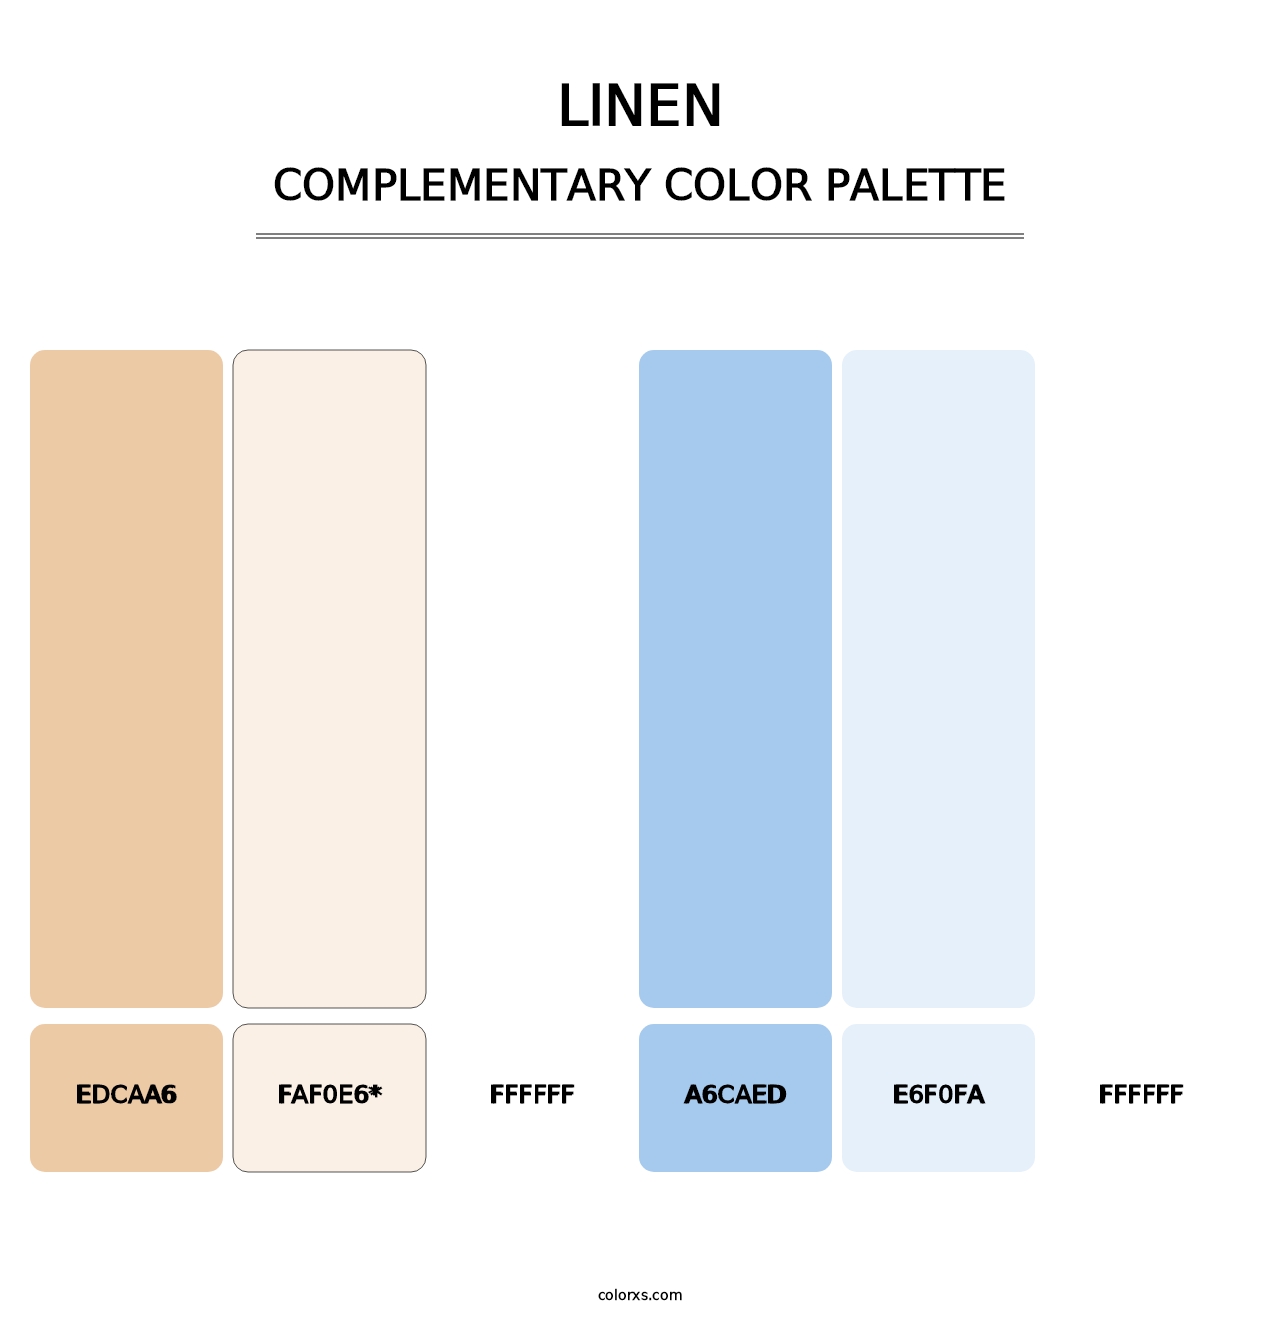 Linen - Complementary Color Palette